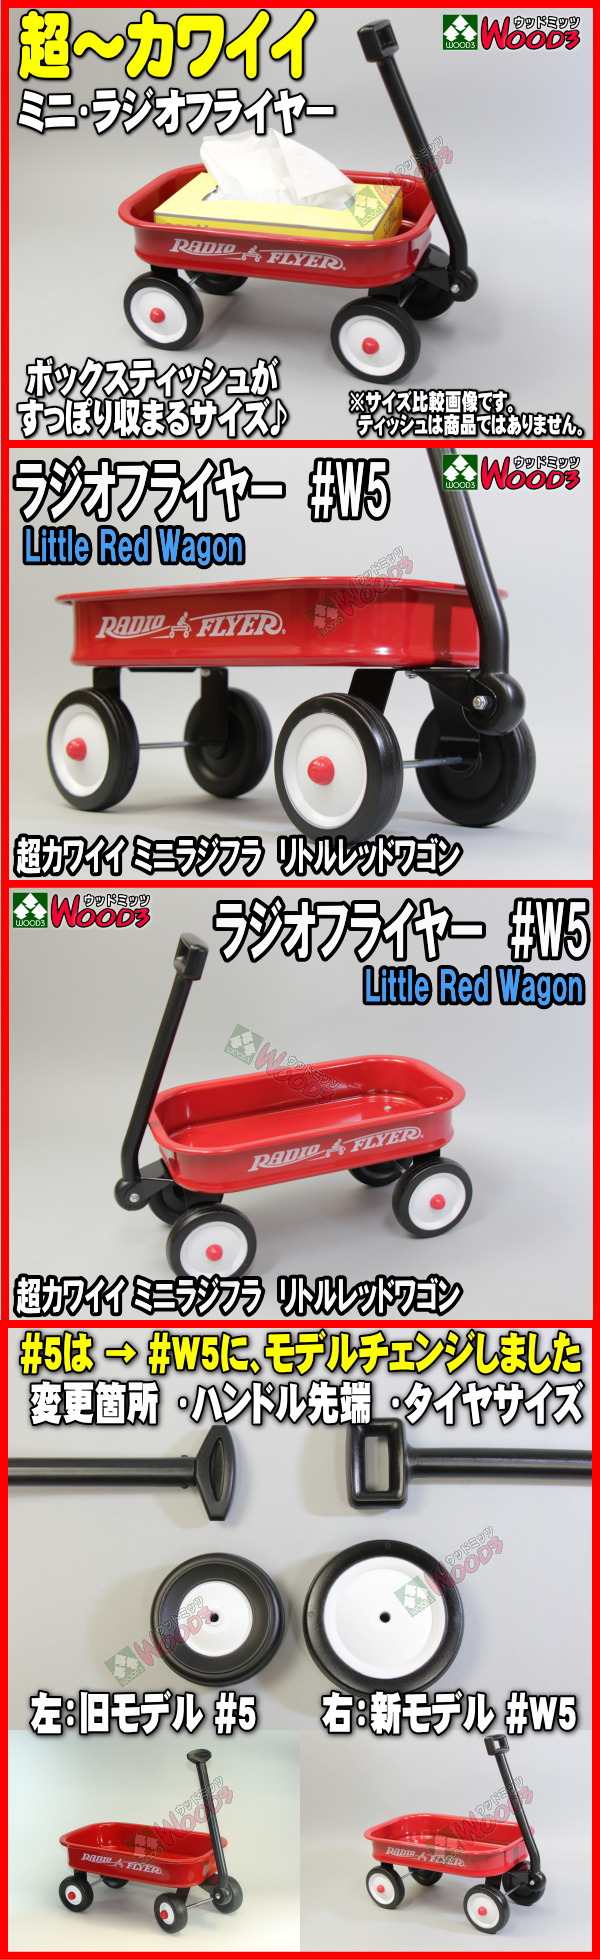  Minya jifla radio Flyer #w5 little red Wagon 